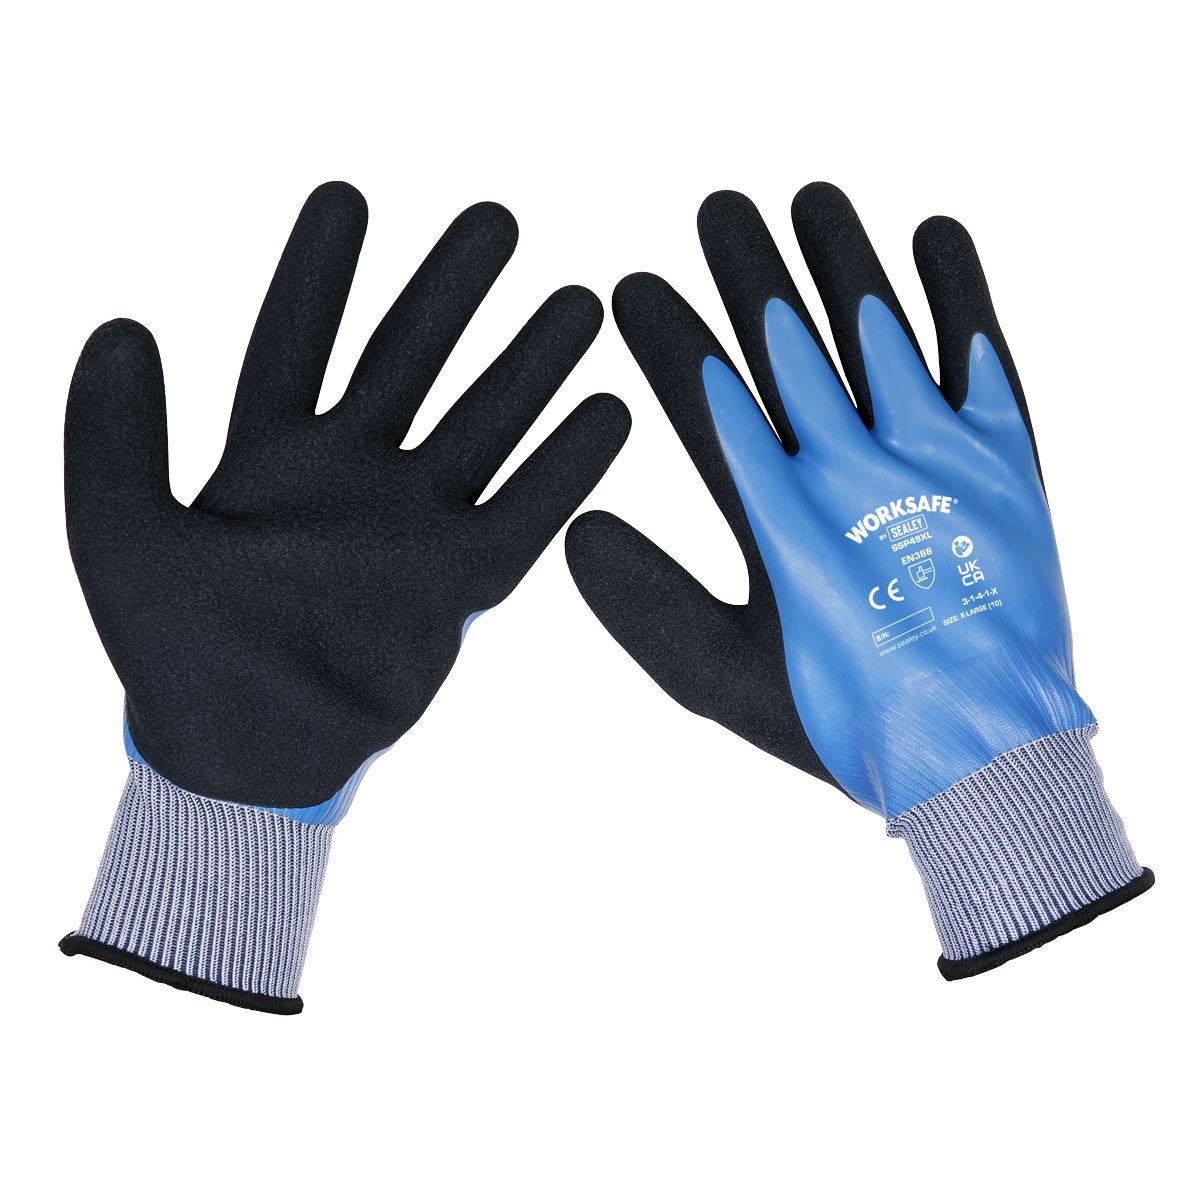 Worksafe by Sealey Waterproof Latex Gloves X-Large – Pair